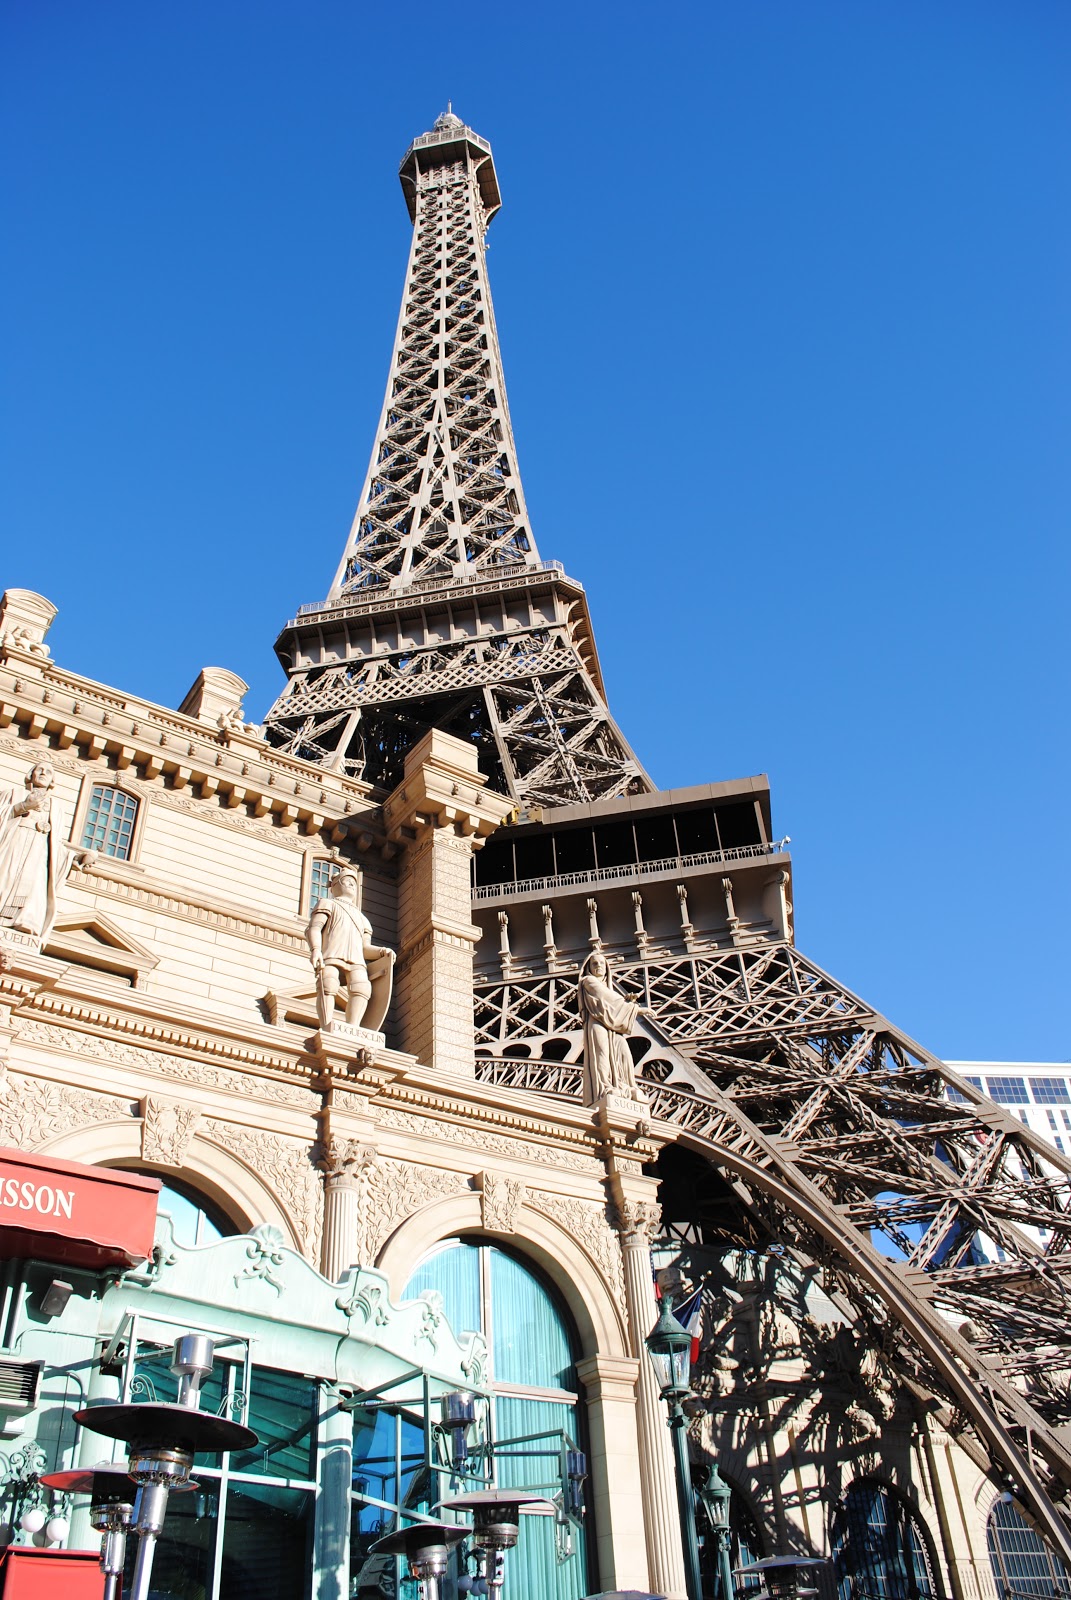 Eiffel Tower Restaurant - Lettuce Entertain You